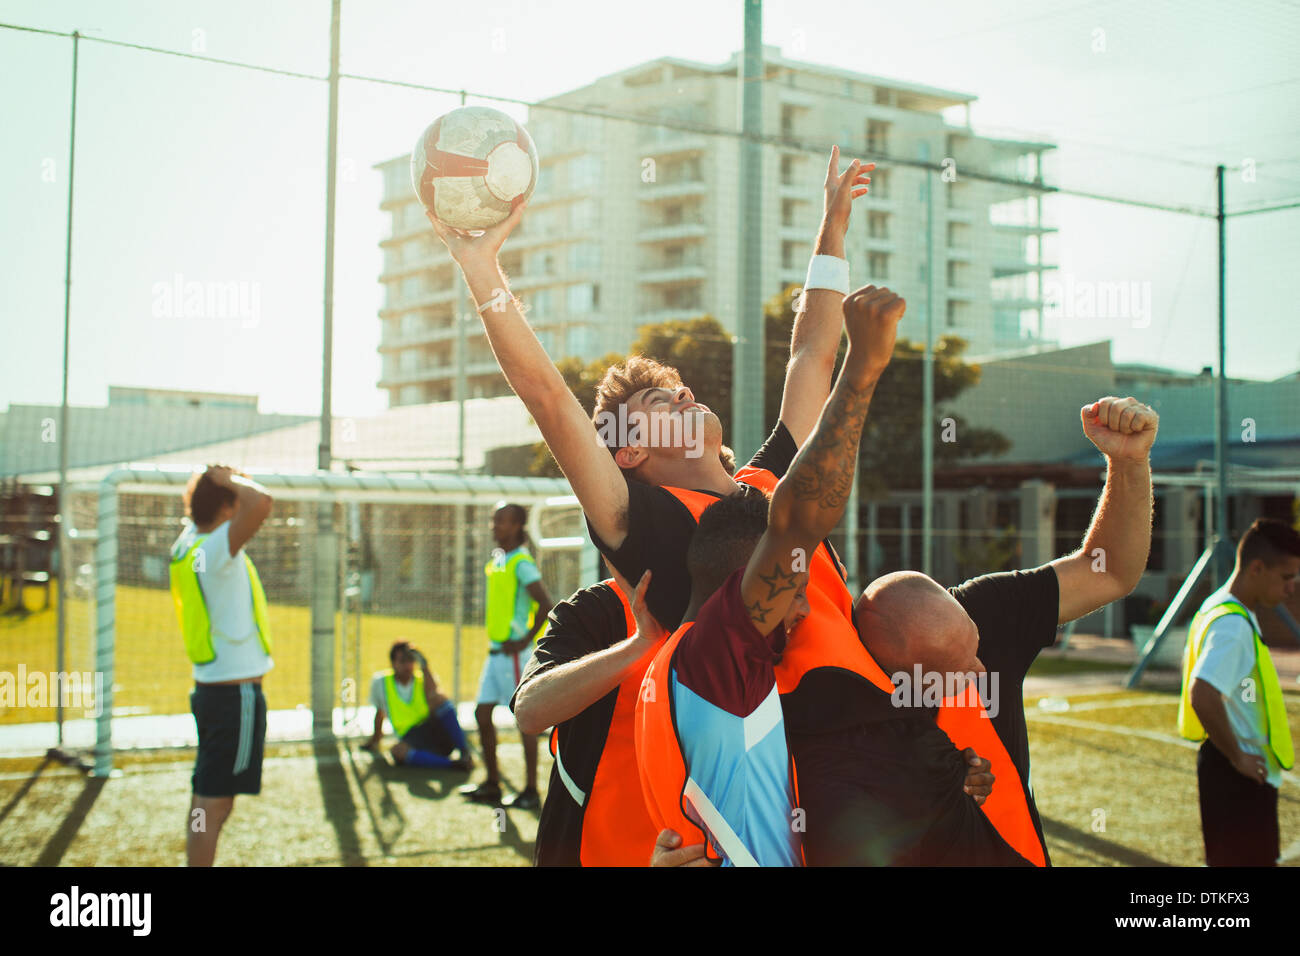 Joueurs de football cheering on field Banque D'Images